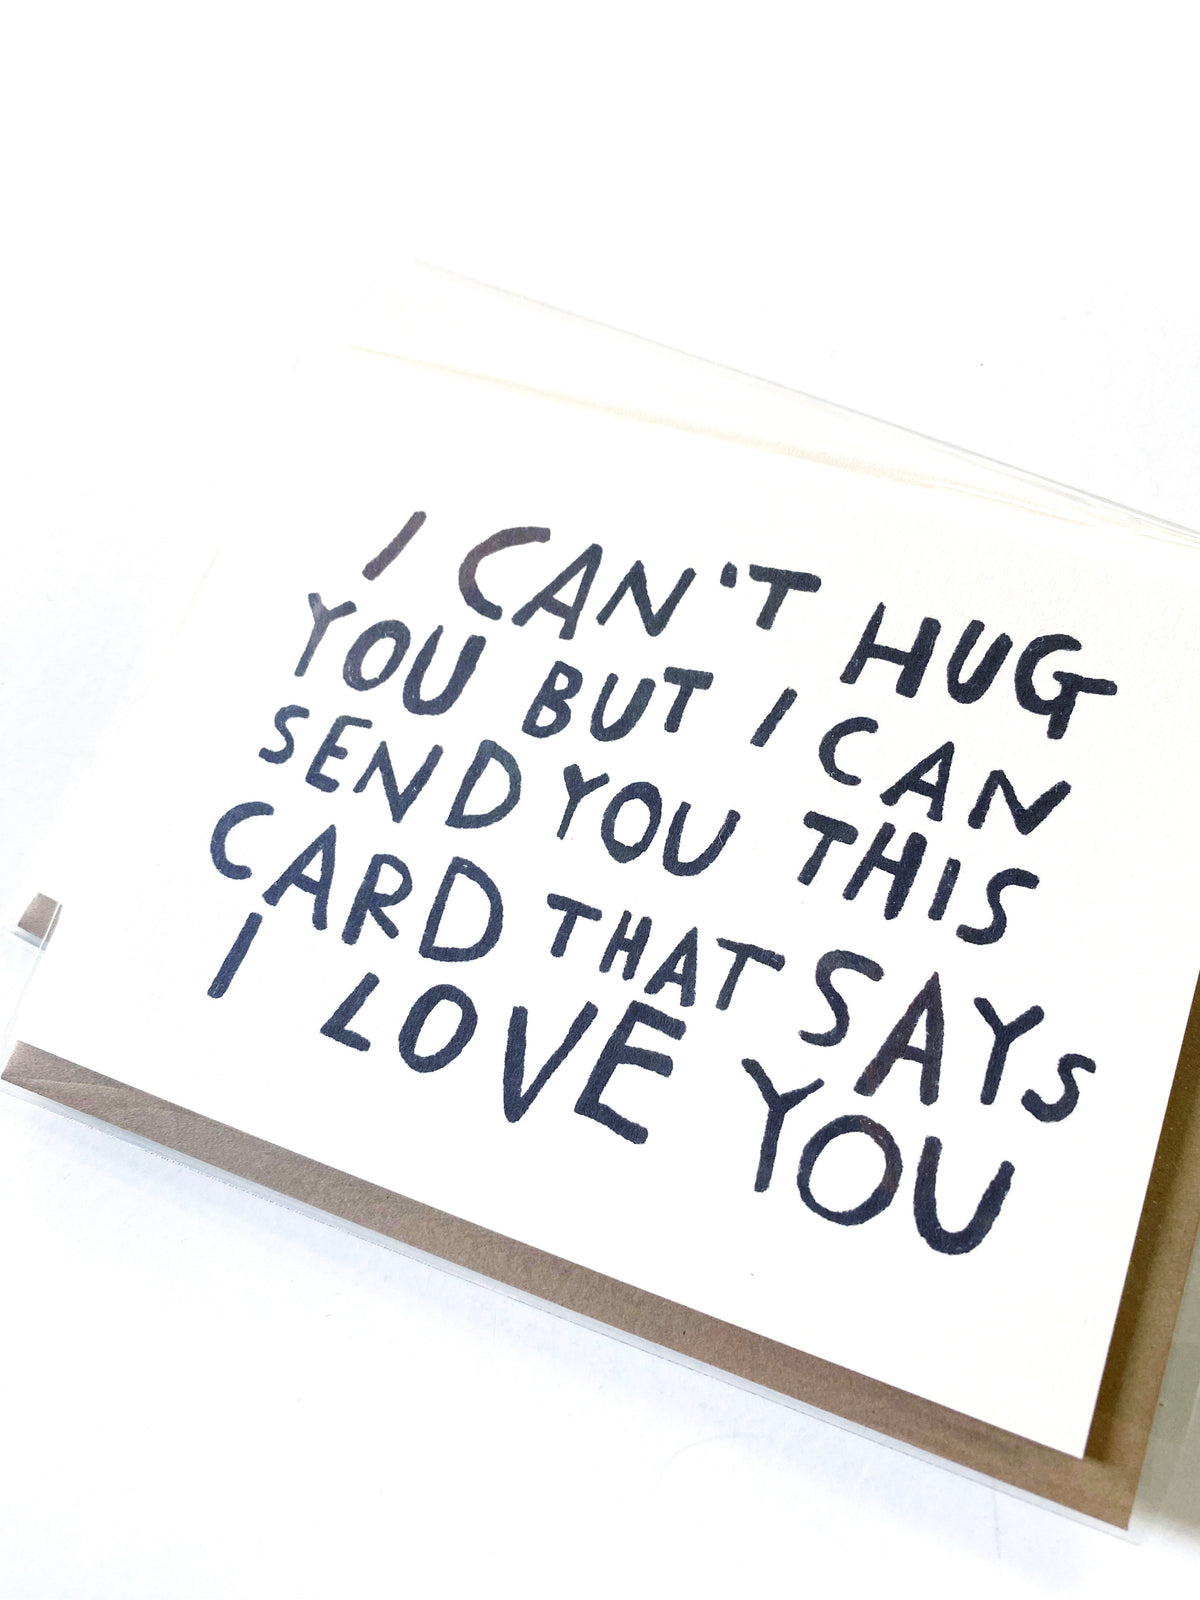 CAN’T HUG YOU Greeting Card